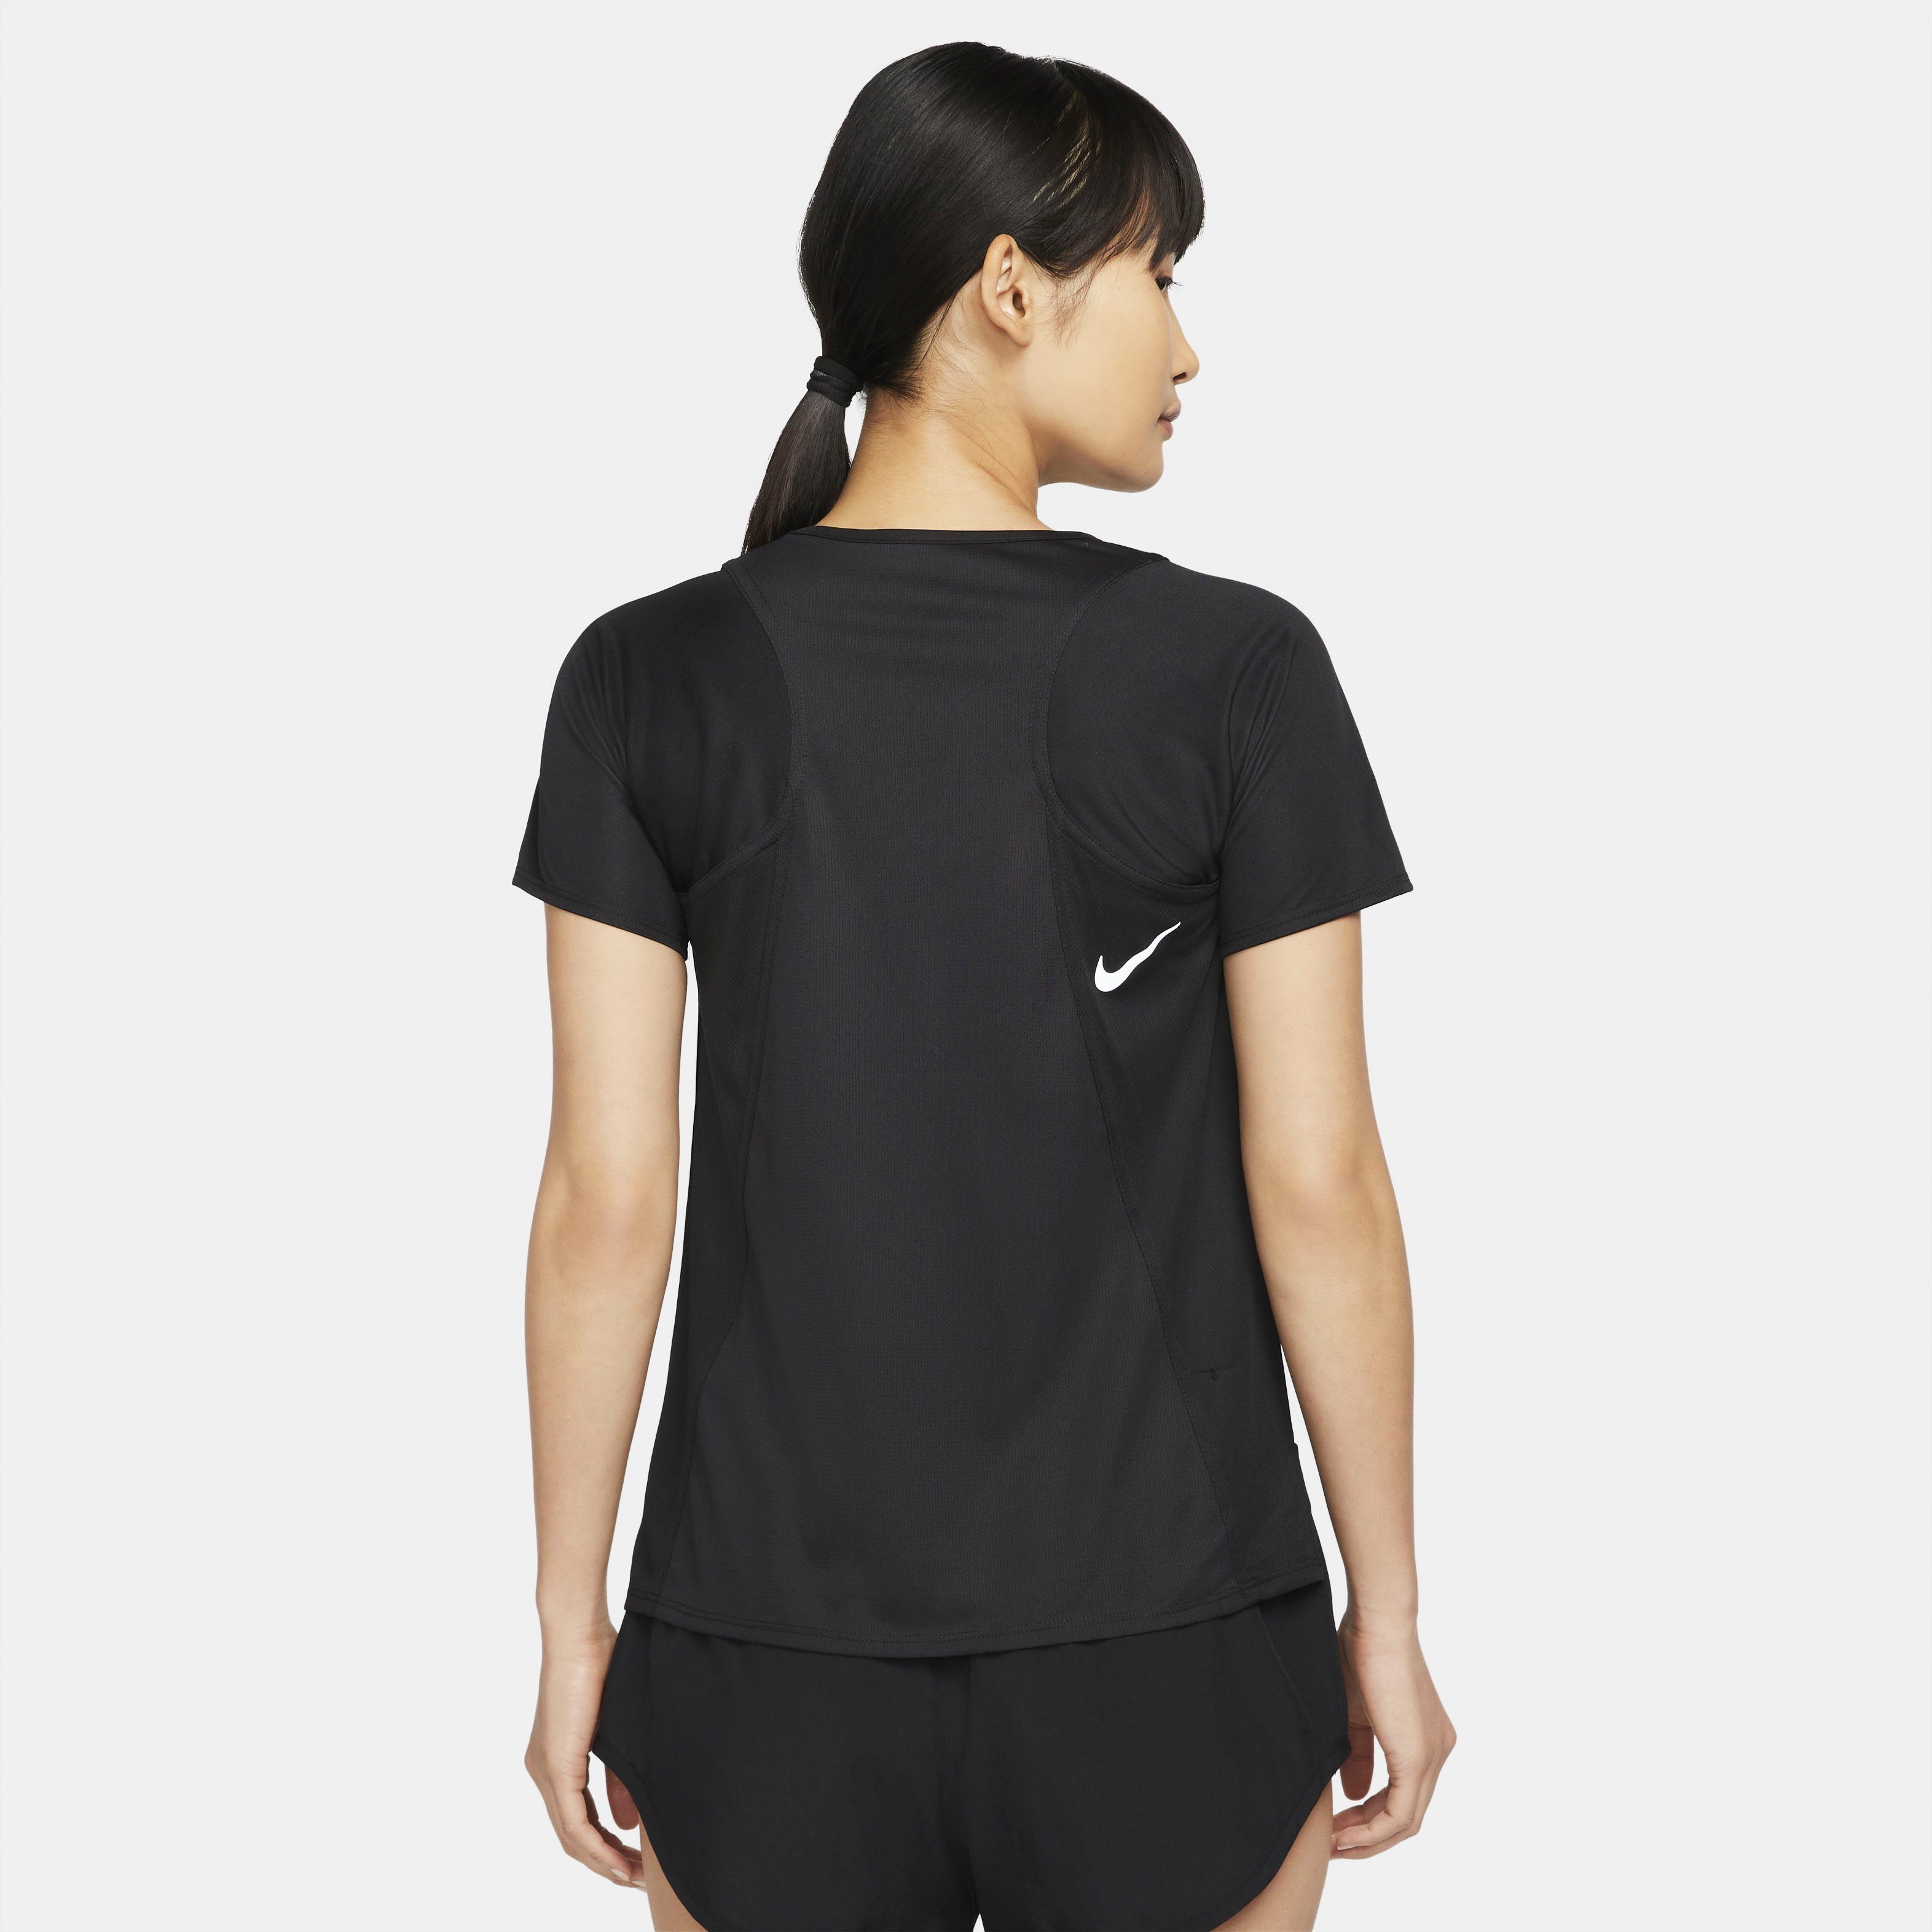 SILV SHORT-SLEEVE BLACK/REFLECTIVE RACE WOMEN'S RUNNING TOP Laufshirt DRI-FIT Nike